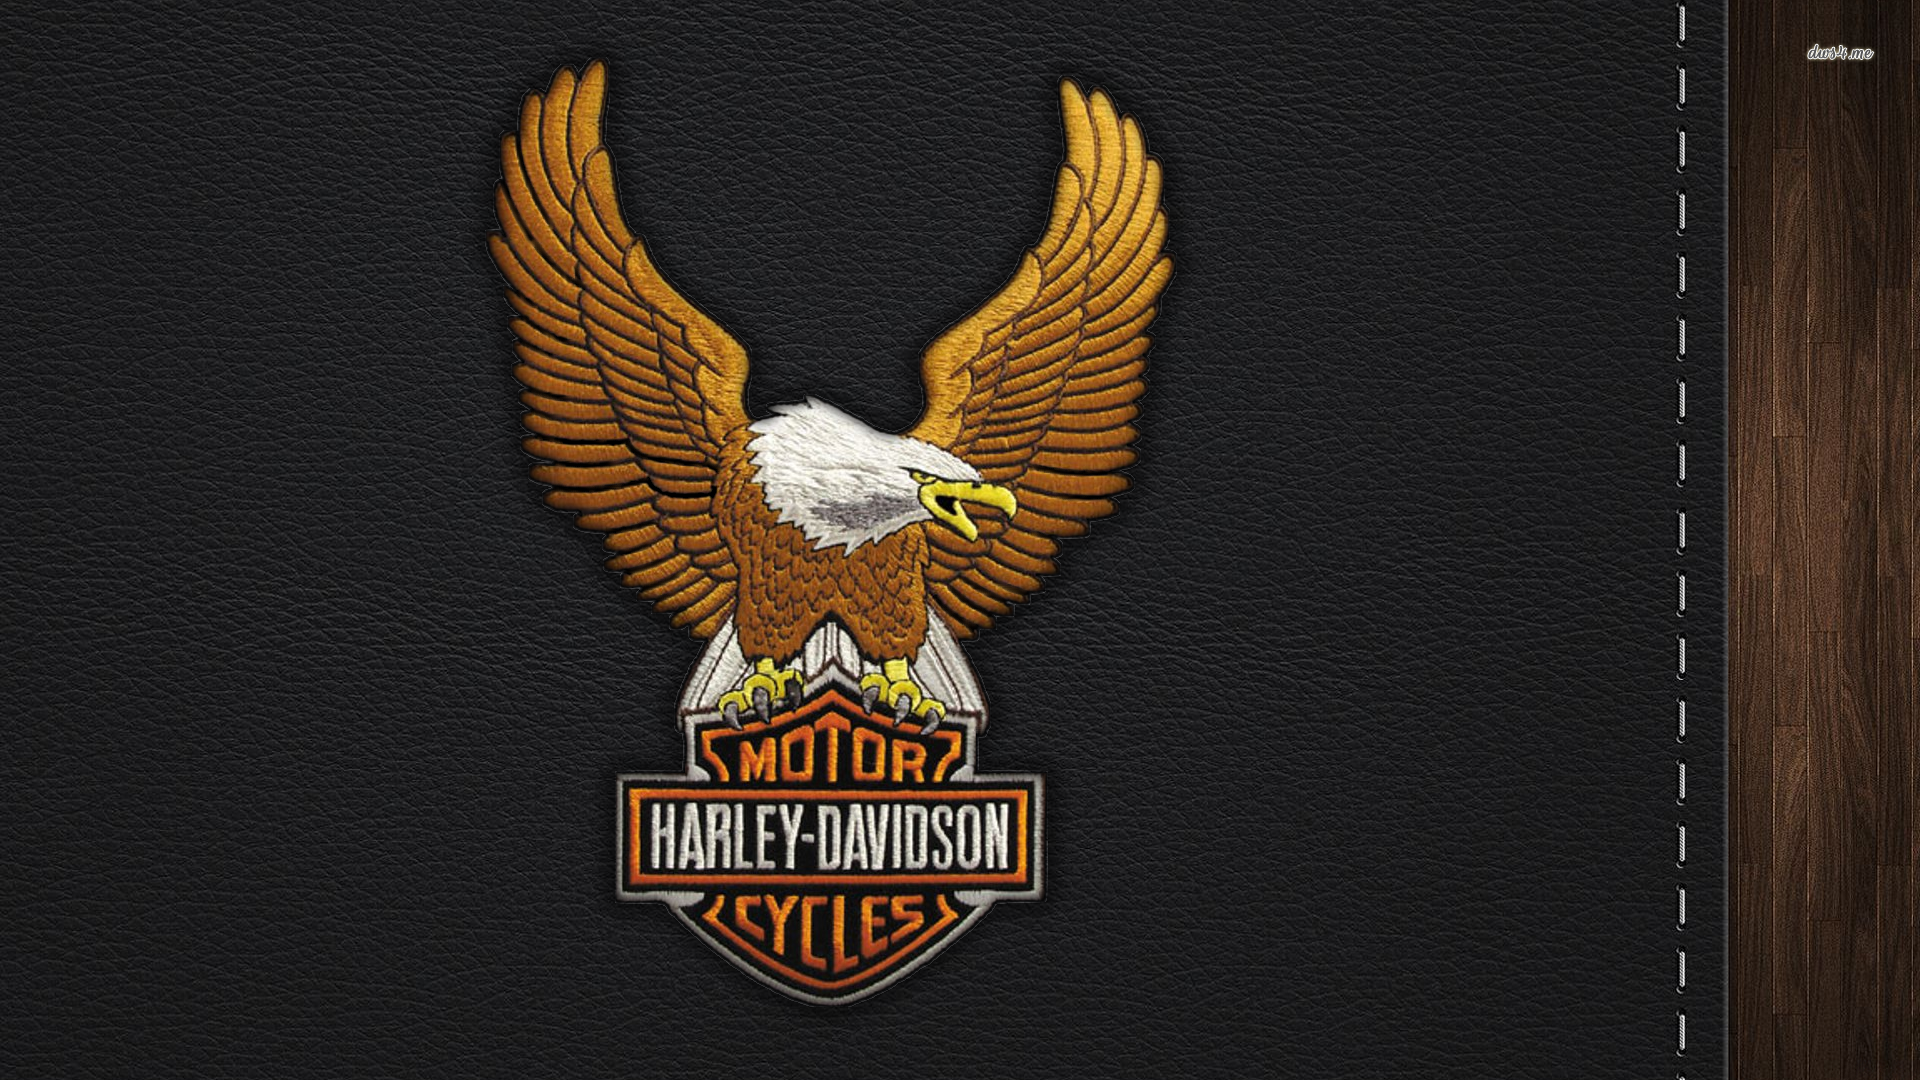 Harley Davidson Eagle Logo Wallpaper Motorcycle Wallpapers 46287